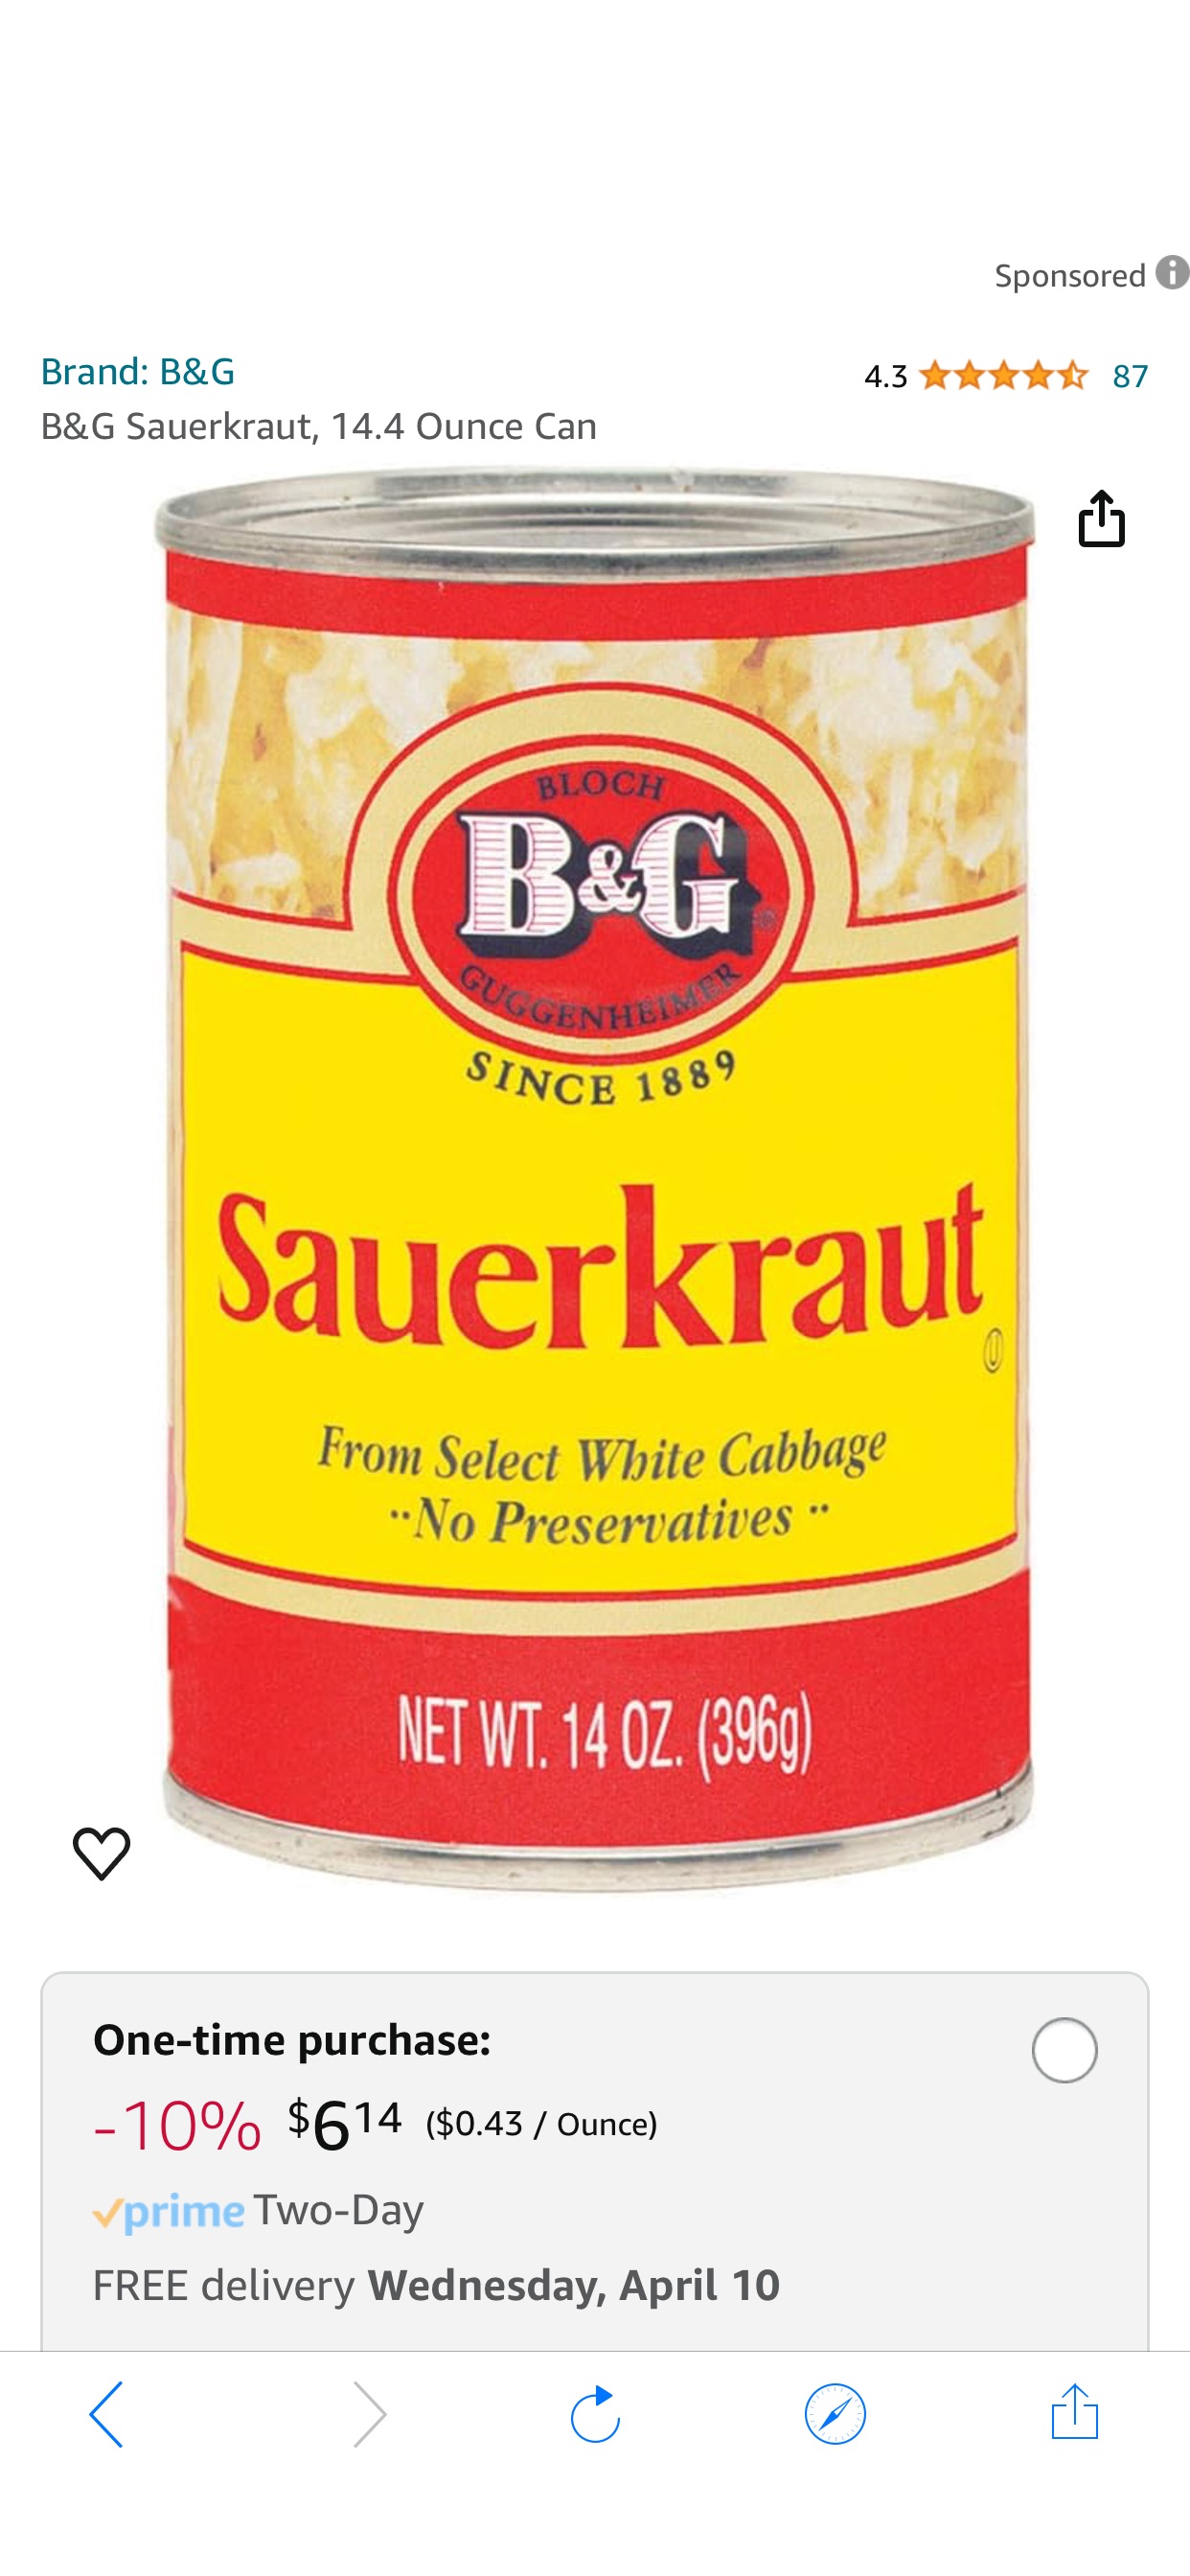 Amazon.com: B&G Sauerkraut, 14.4 Ounce Can : Grocery & Gourmet Food 酸菜